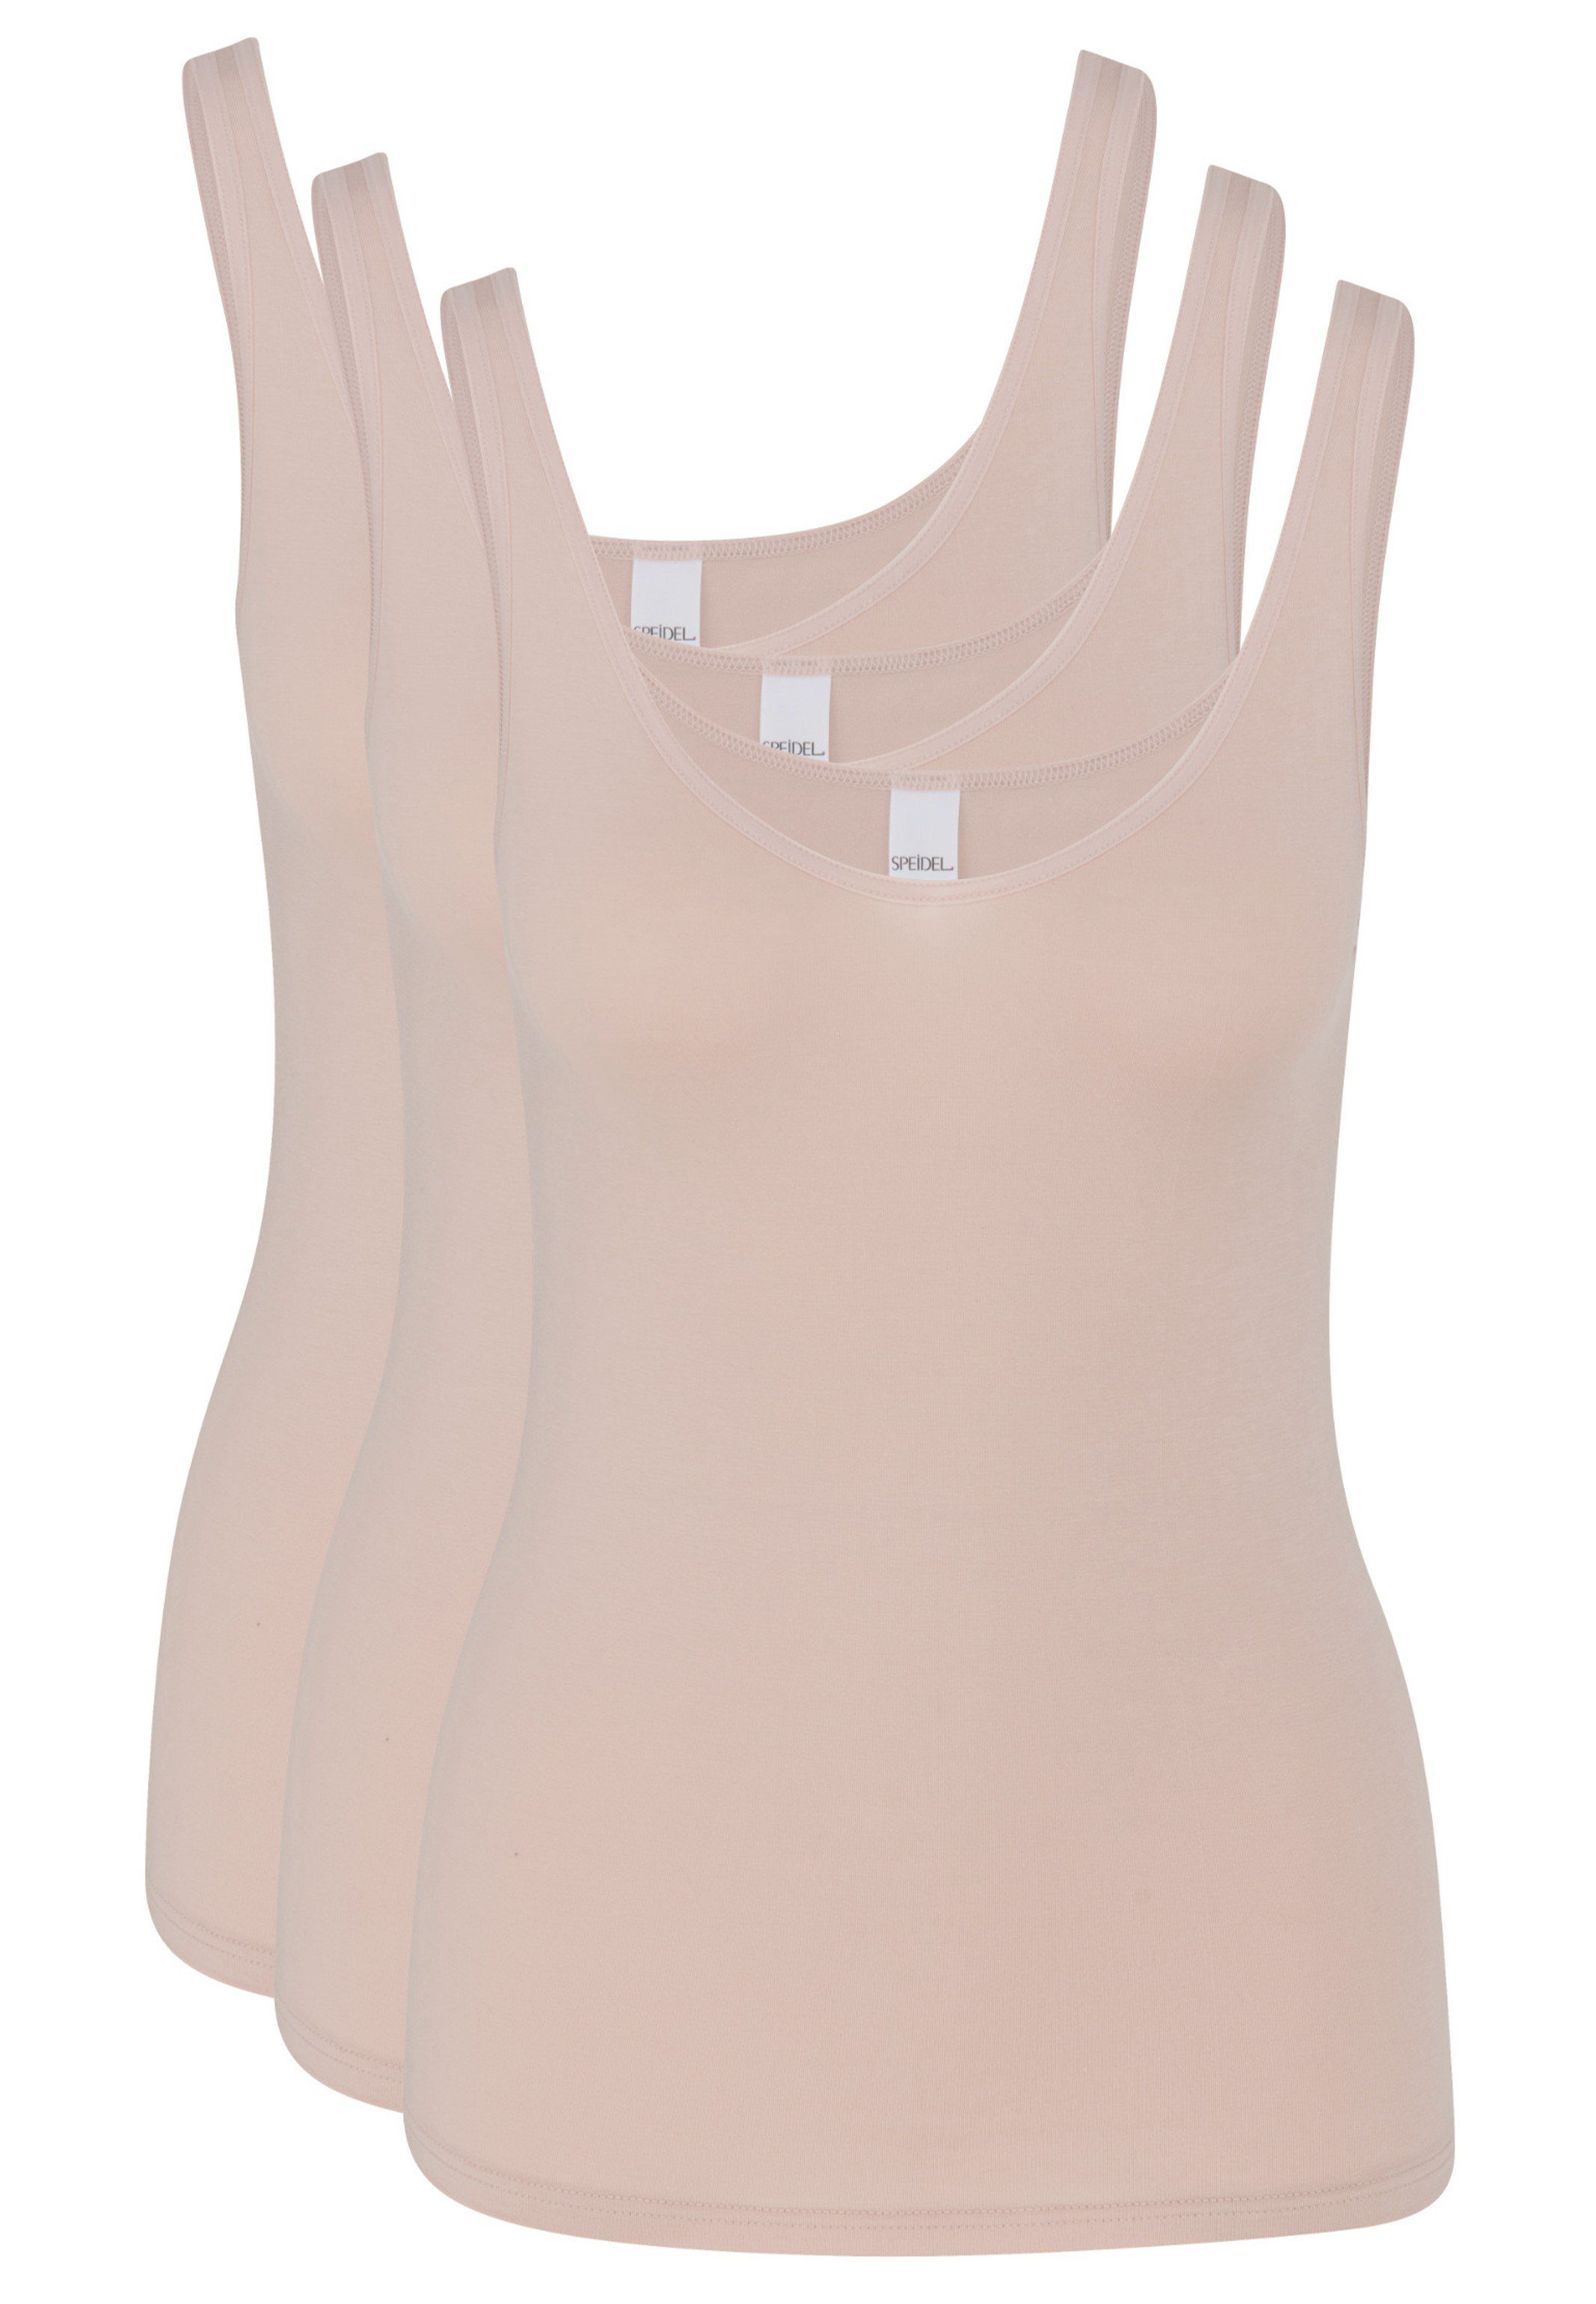 Unterhemd Atmungsaktiv - (Spar-Set, / 3-St) - 3er Hellbeige Top Unterhemd Softfeeling Pack Baumwolle Speidel